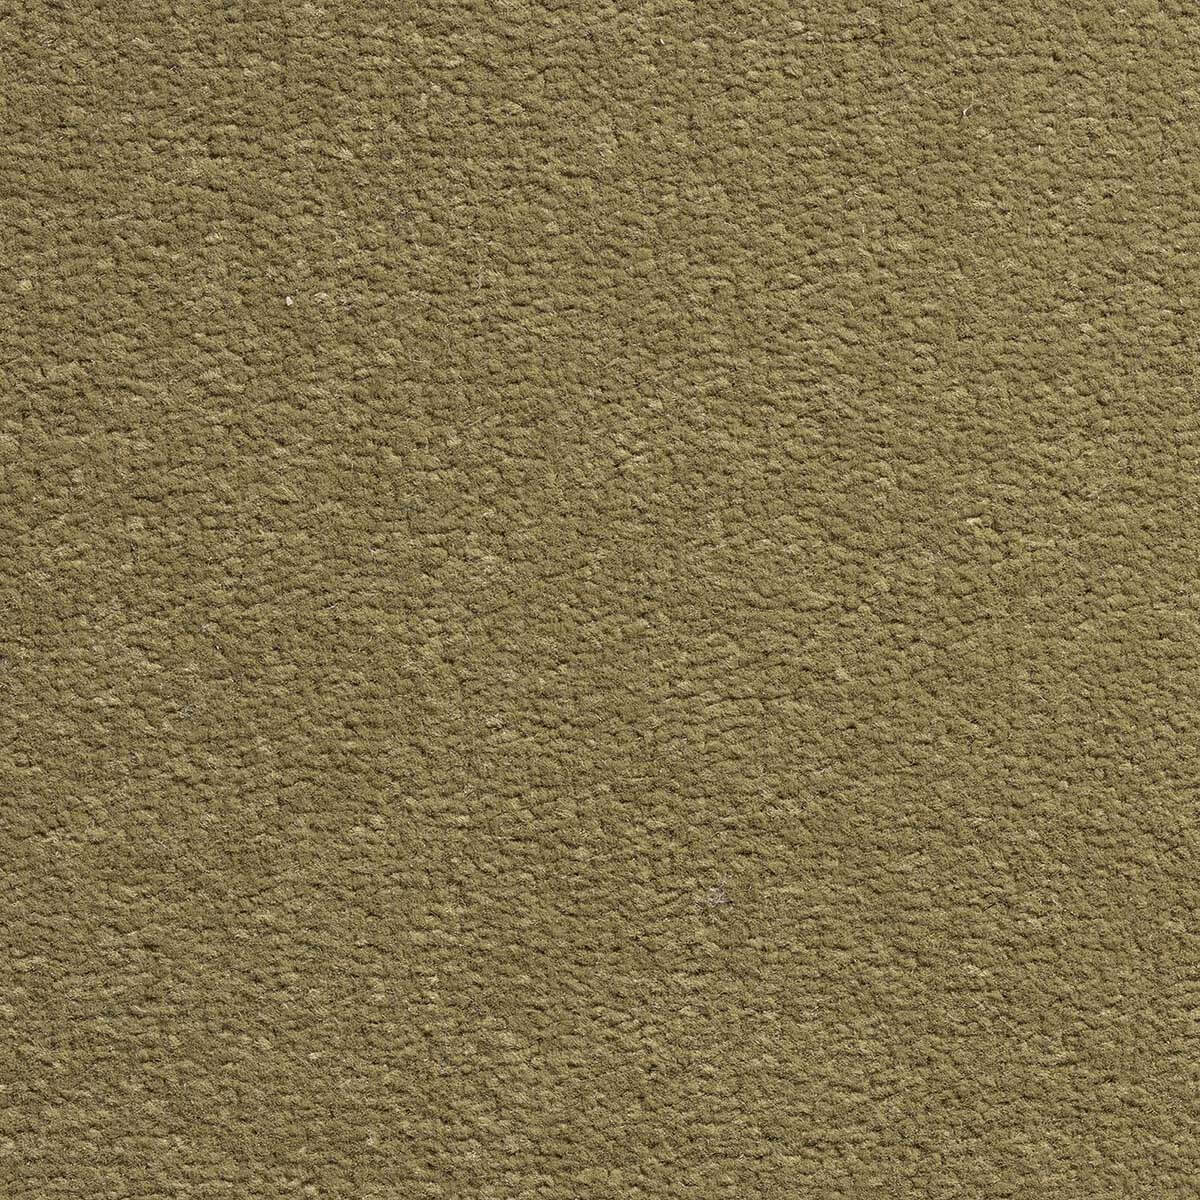 Pret a Porter Twist Carpet - 546 Lichen